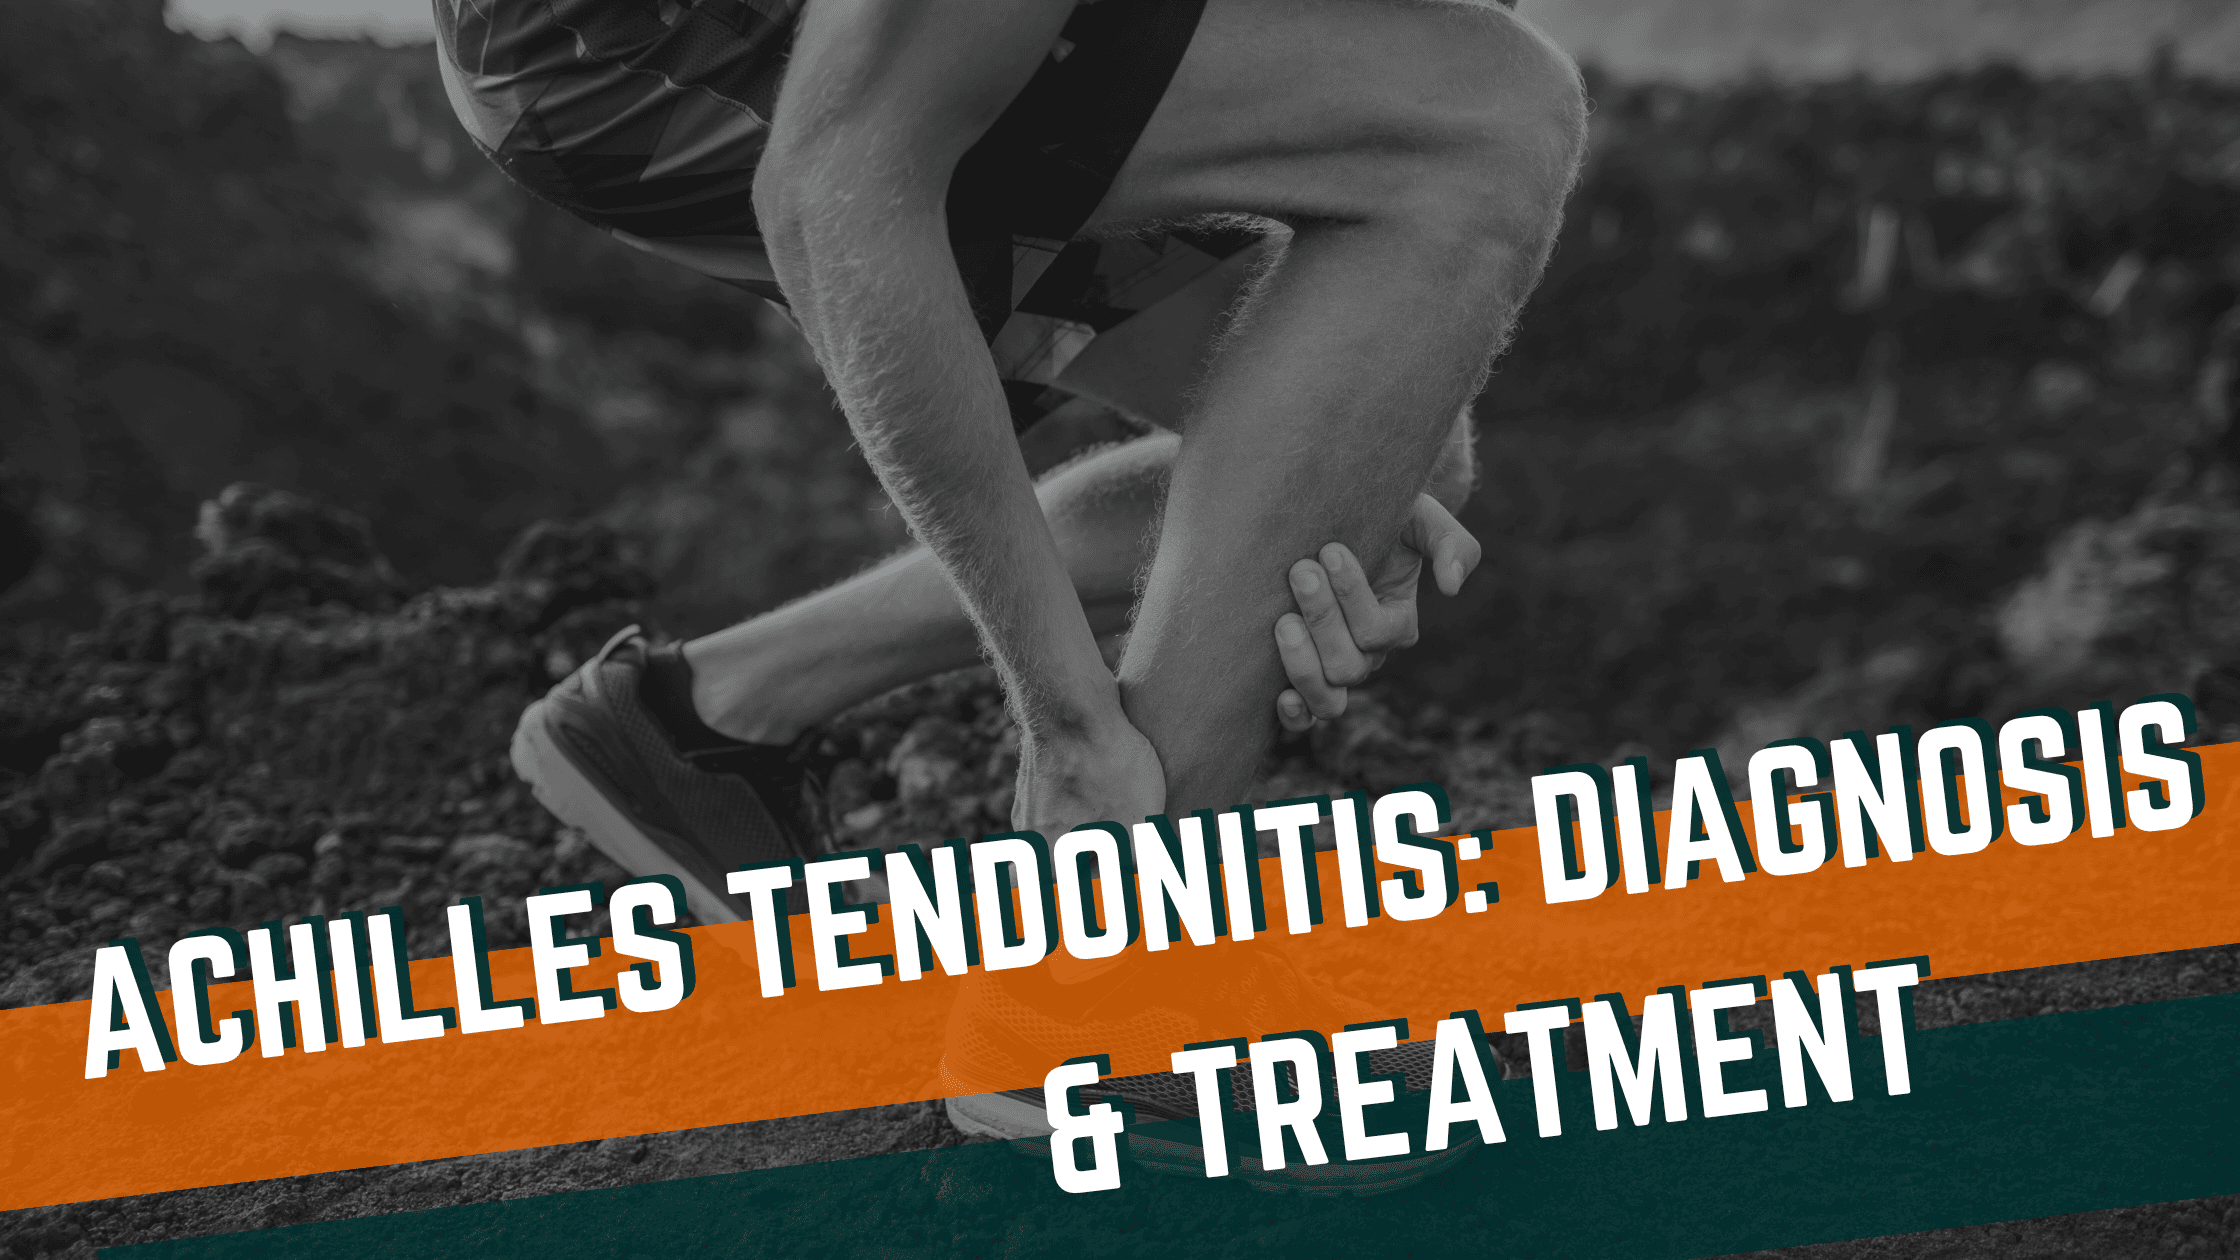 Featured image for “Achilles Tendonitis: Diagnosis & Treatment”